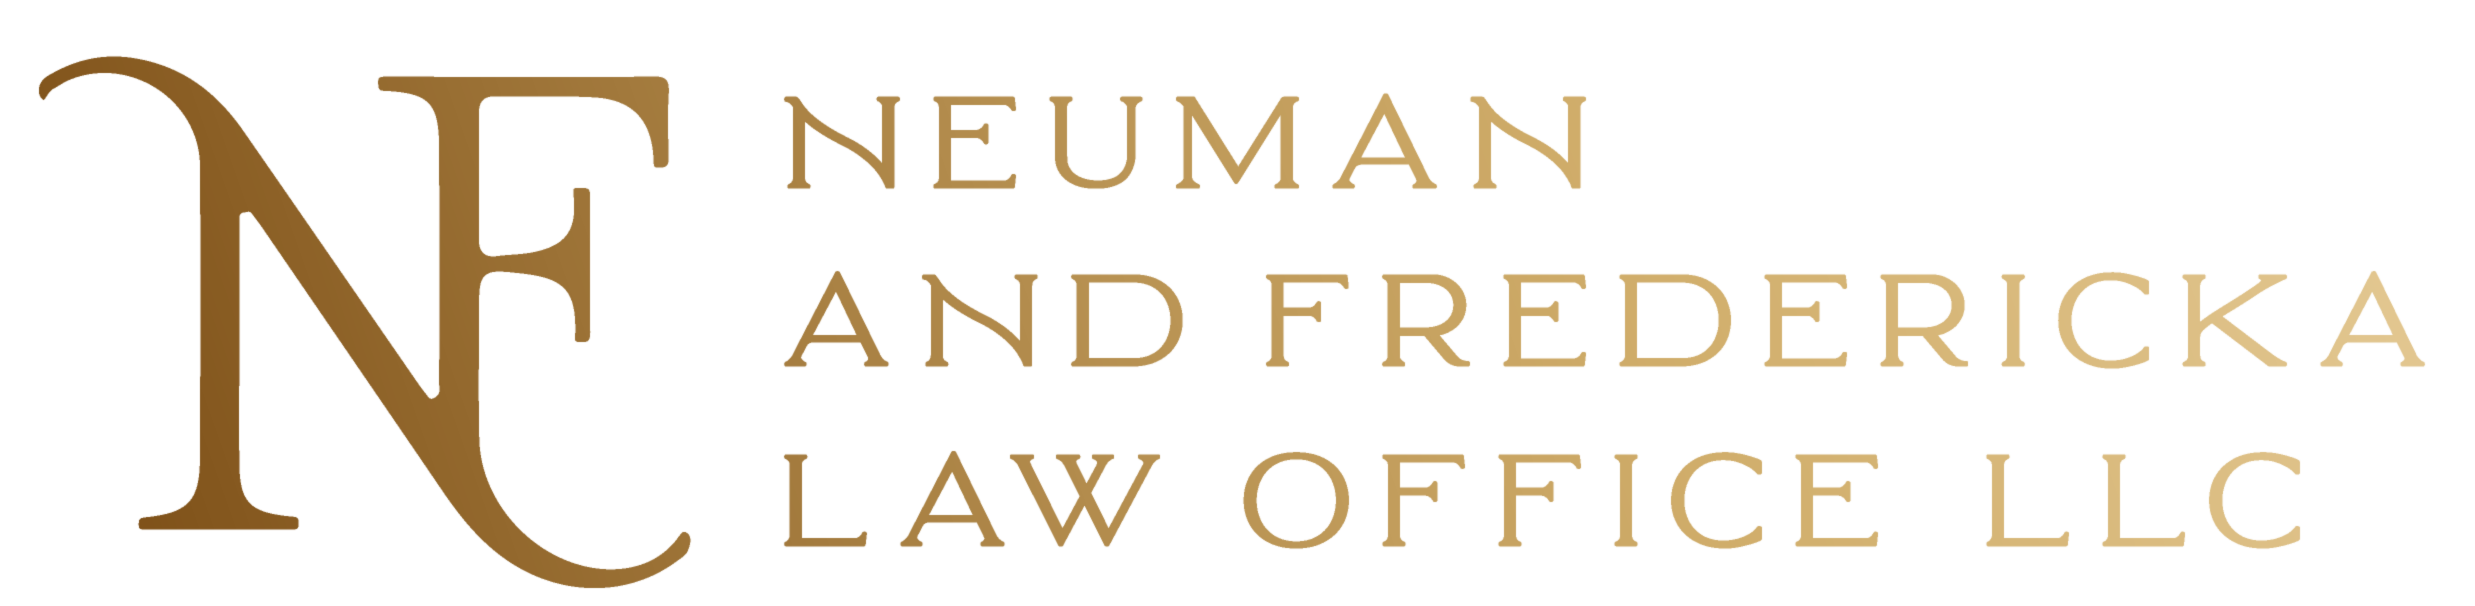 Neuman and Fredericka Law Office LLC